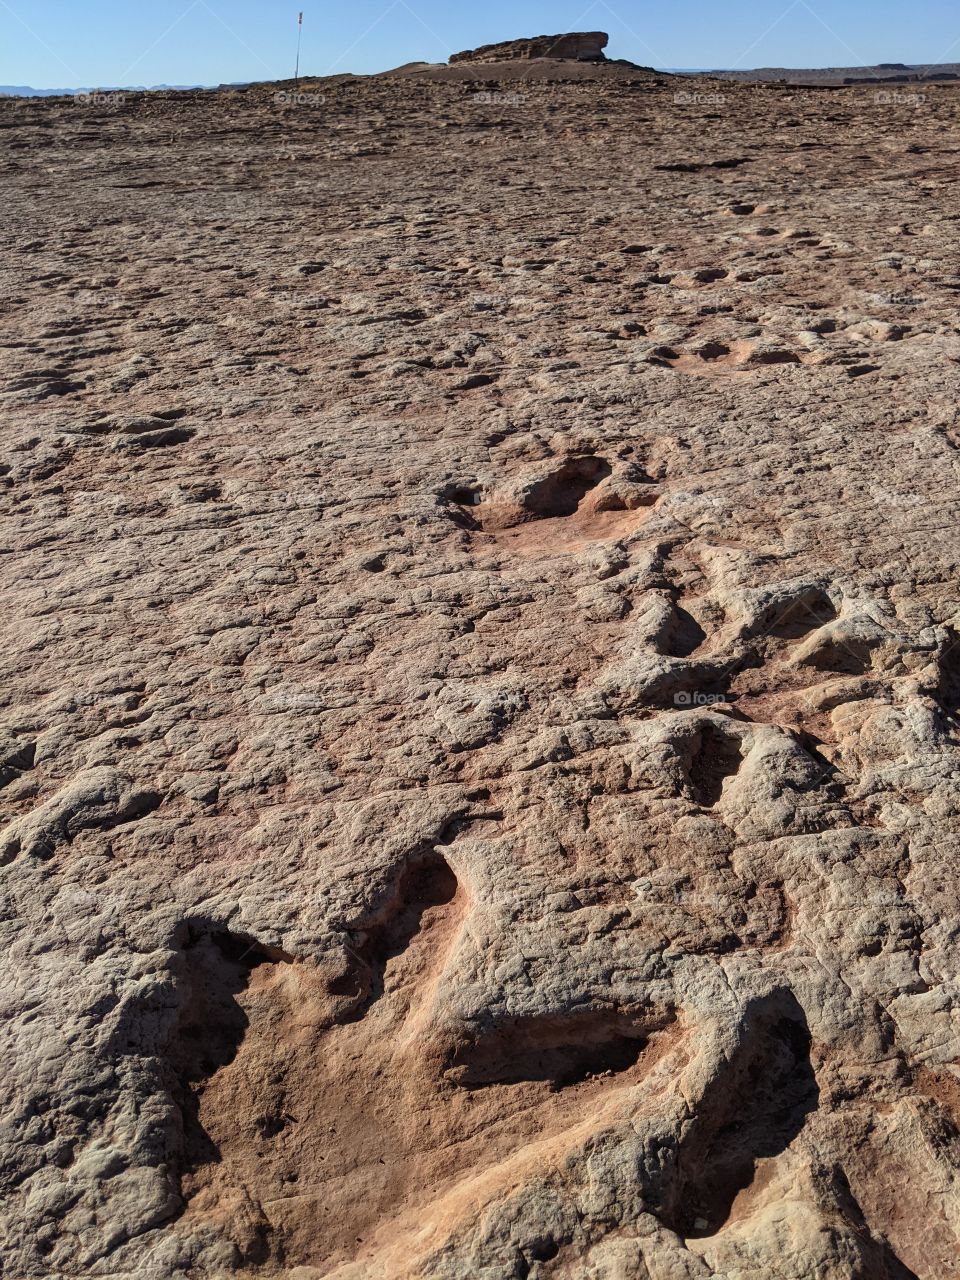 Fossilized Dinosaur Tracks in Utah